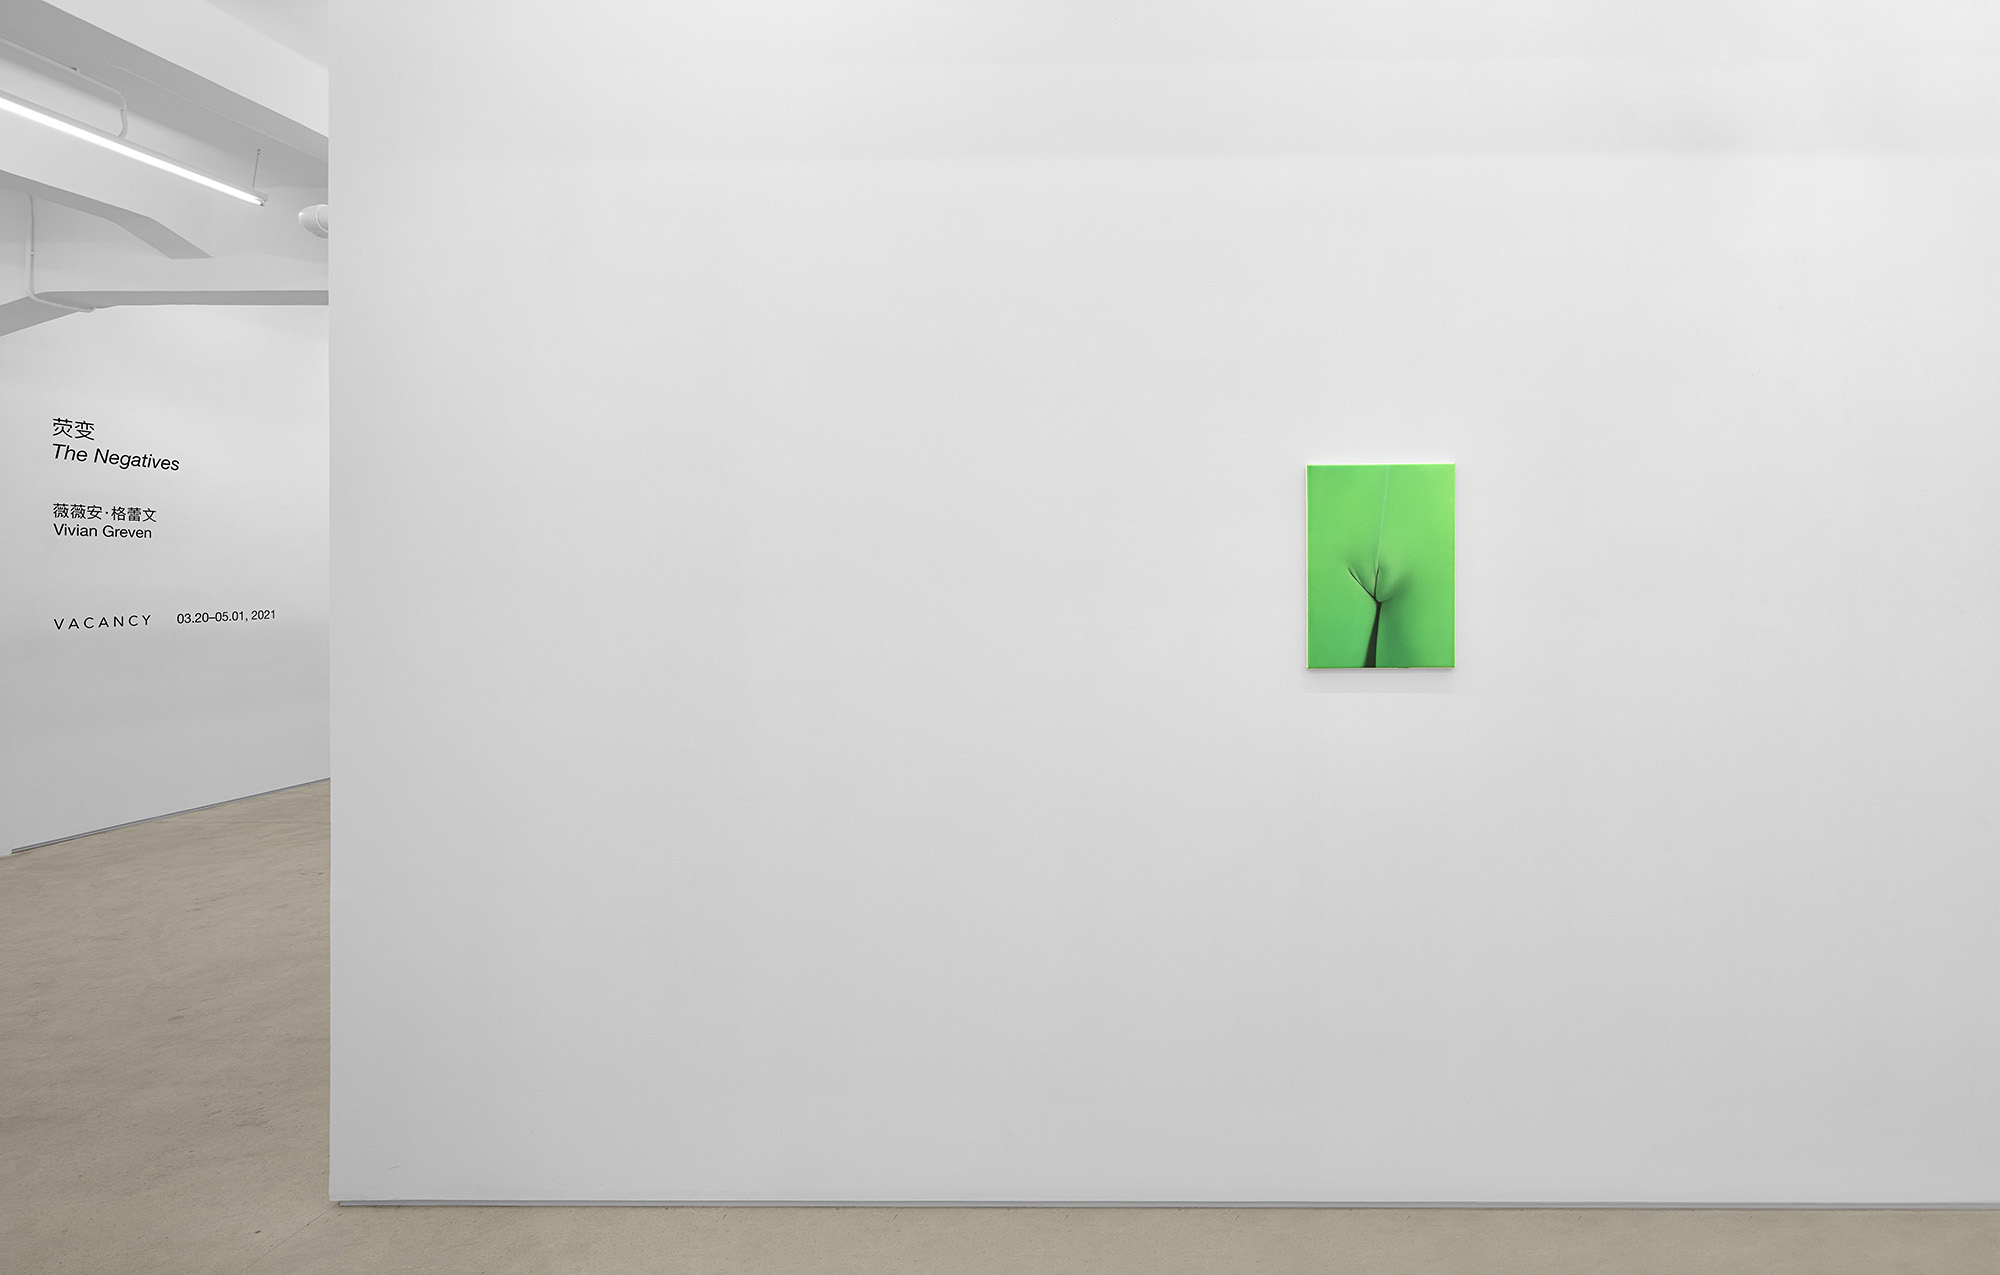 Vivian Greven, The Negatives, solo exhibition at Gallery Vacancy, installation view 28